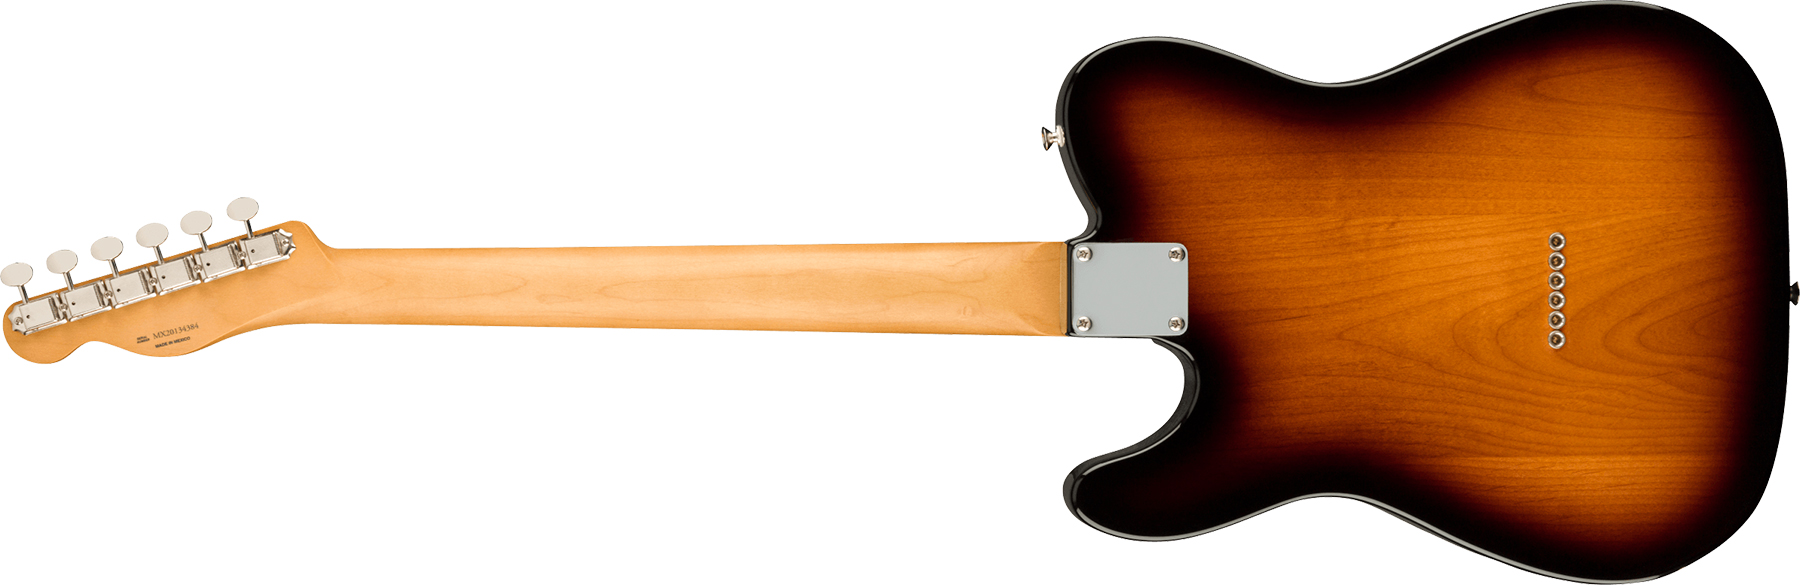 Fender Tele Noventa Mex Pf +housse - 2-color Sunburst - Tel shape electric guitar - Variation 1